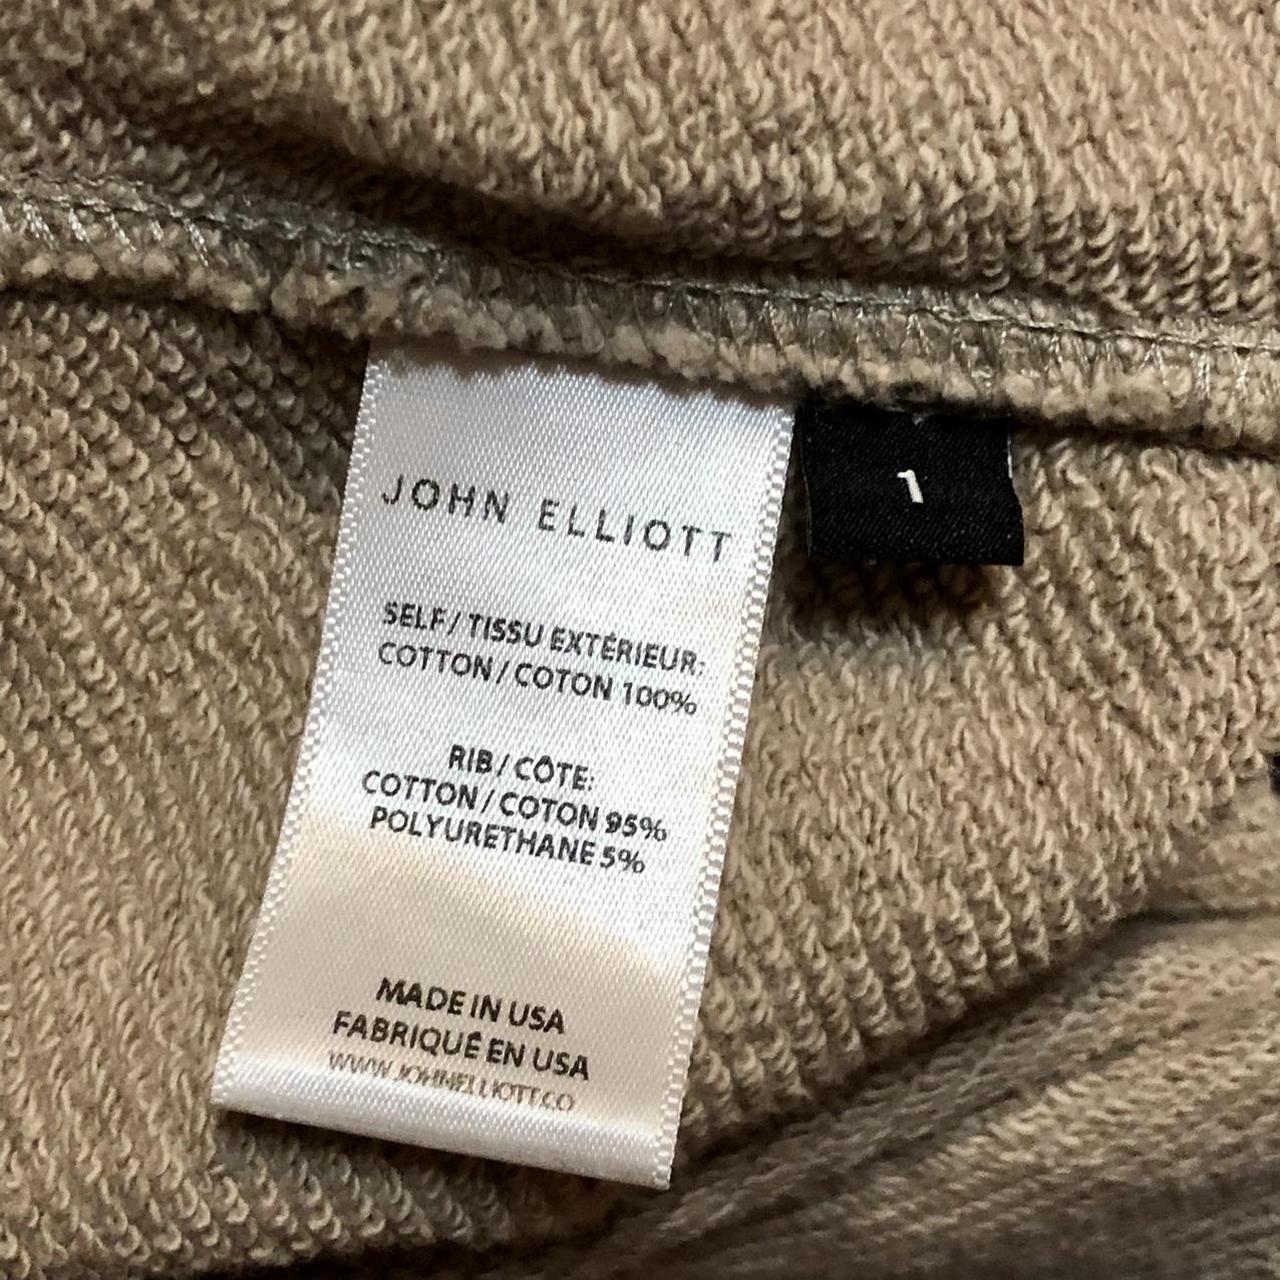 Product Image 4 - John Elliott Jogger Sweatpants
Colorway: Dust/Sand
Great